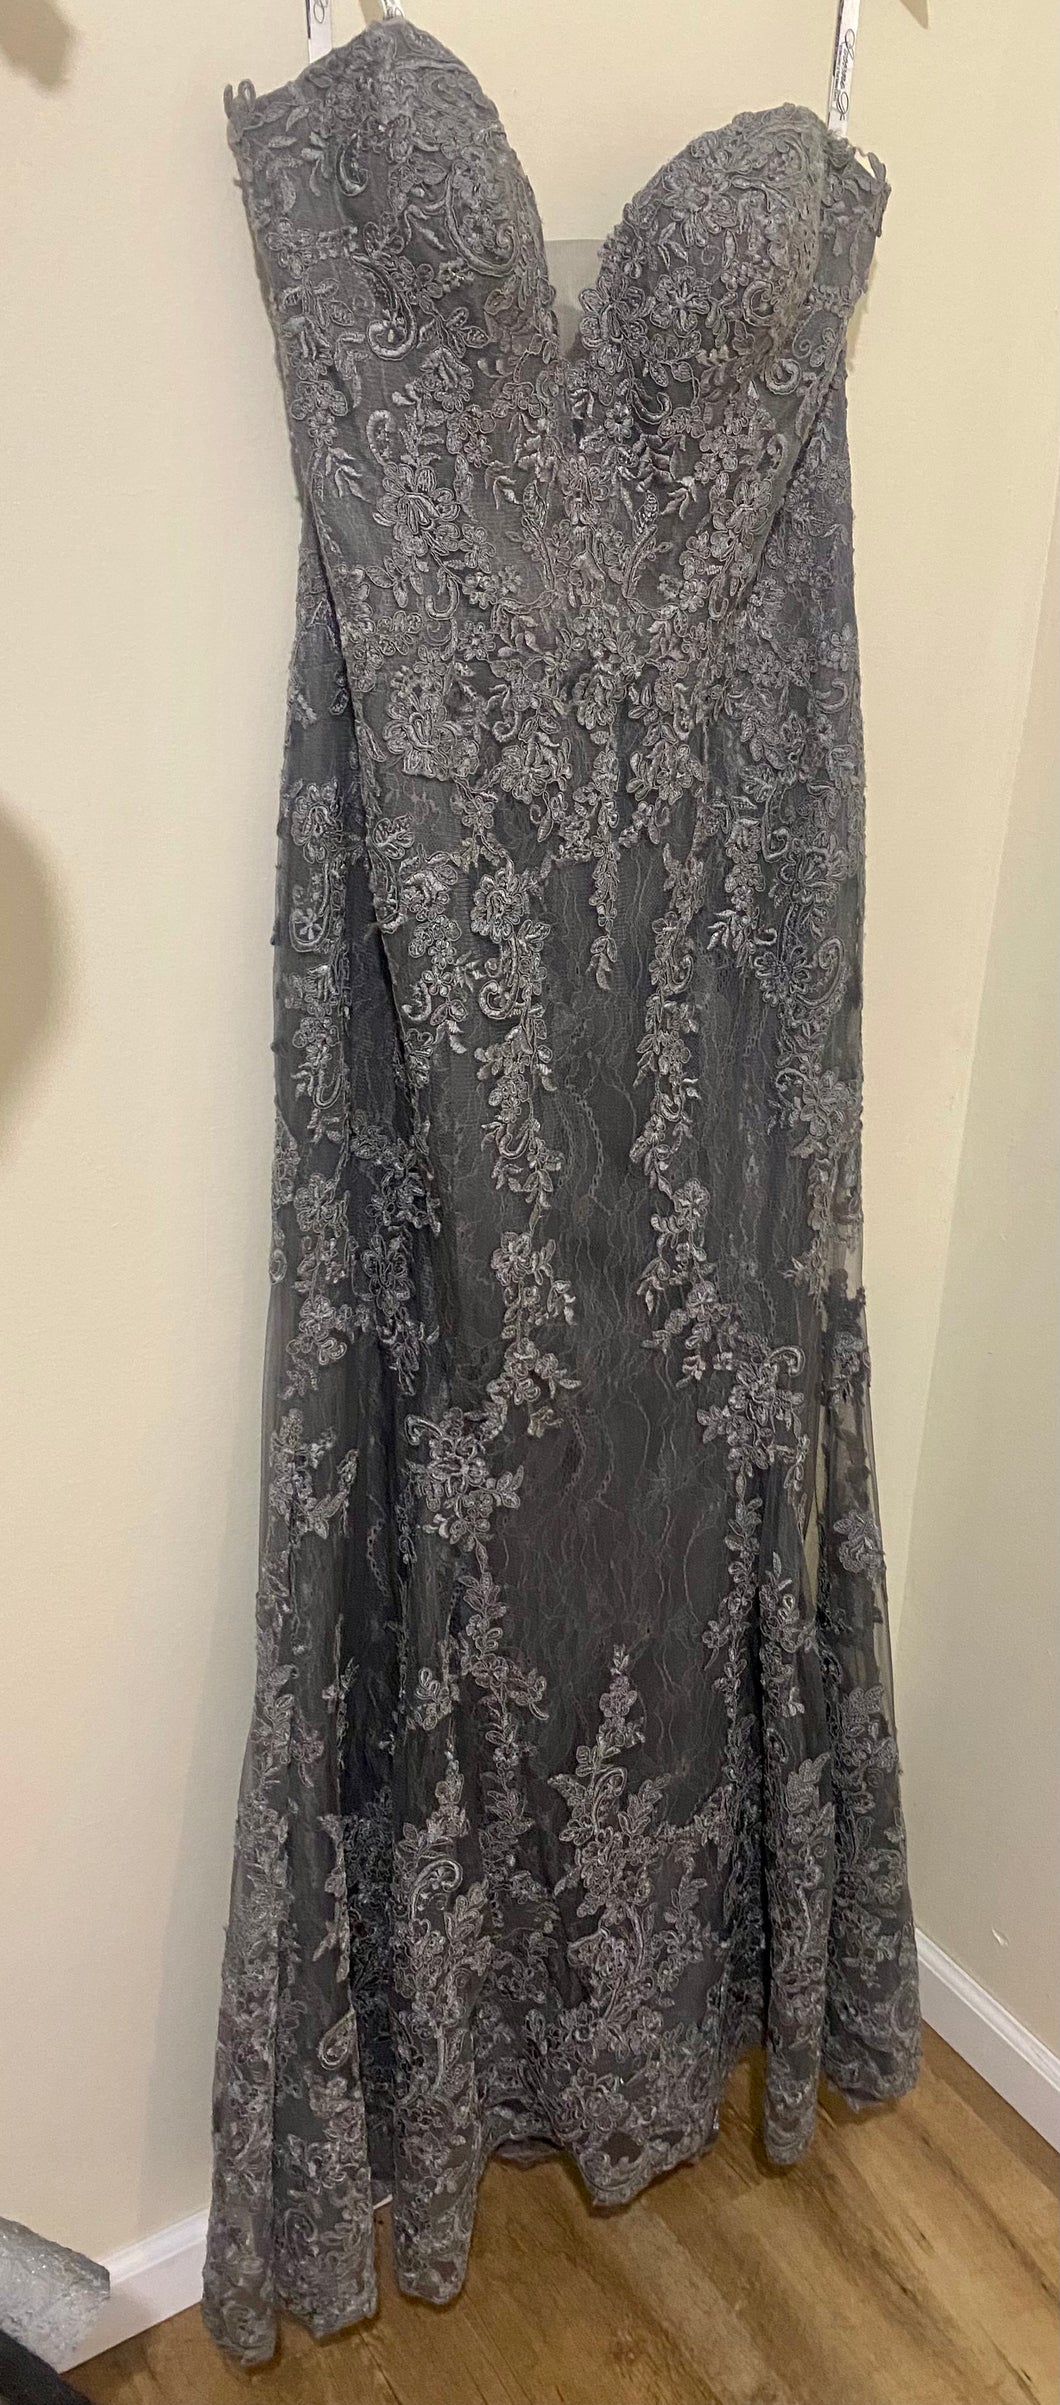 GOWN100-B Charcoal Grey, Lace Appliqués. Size 18 New